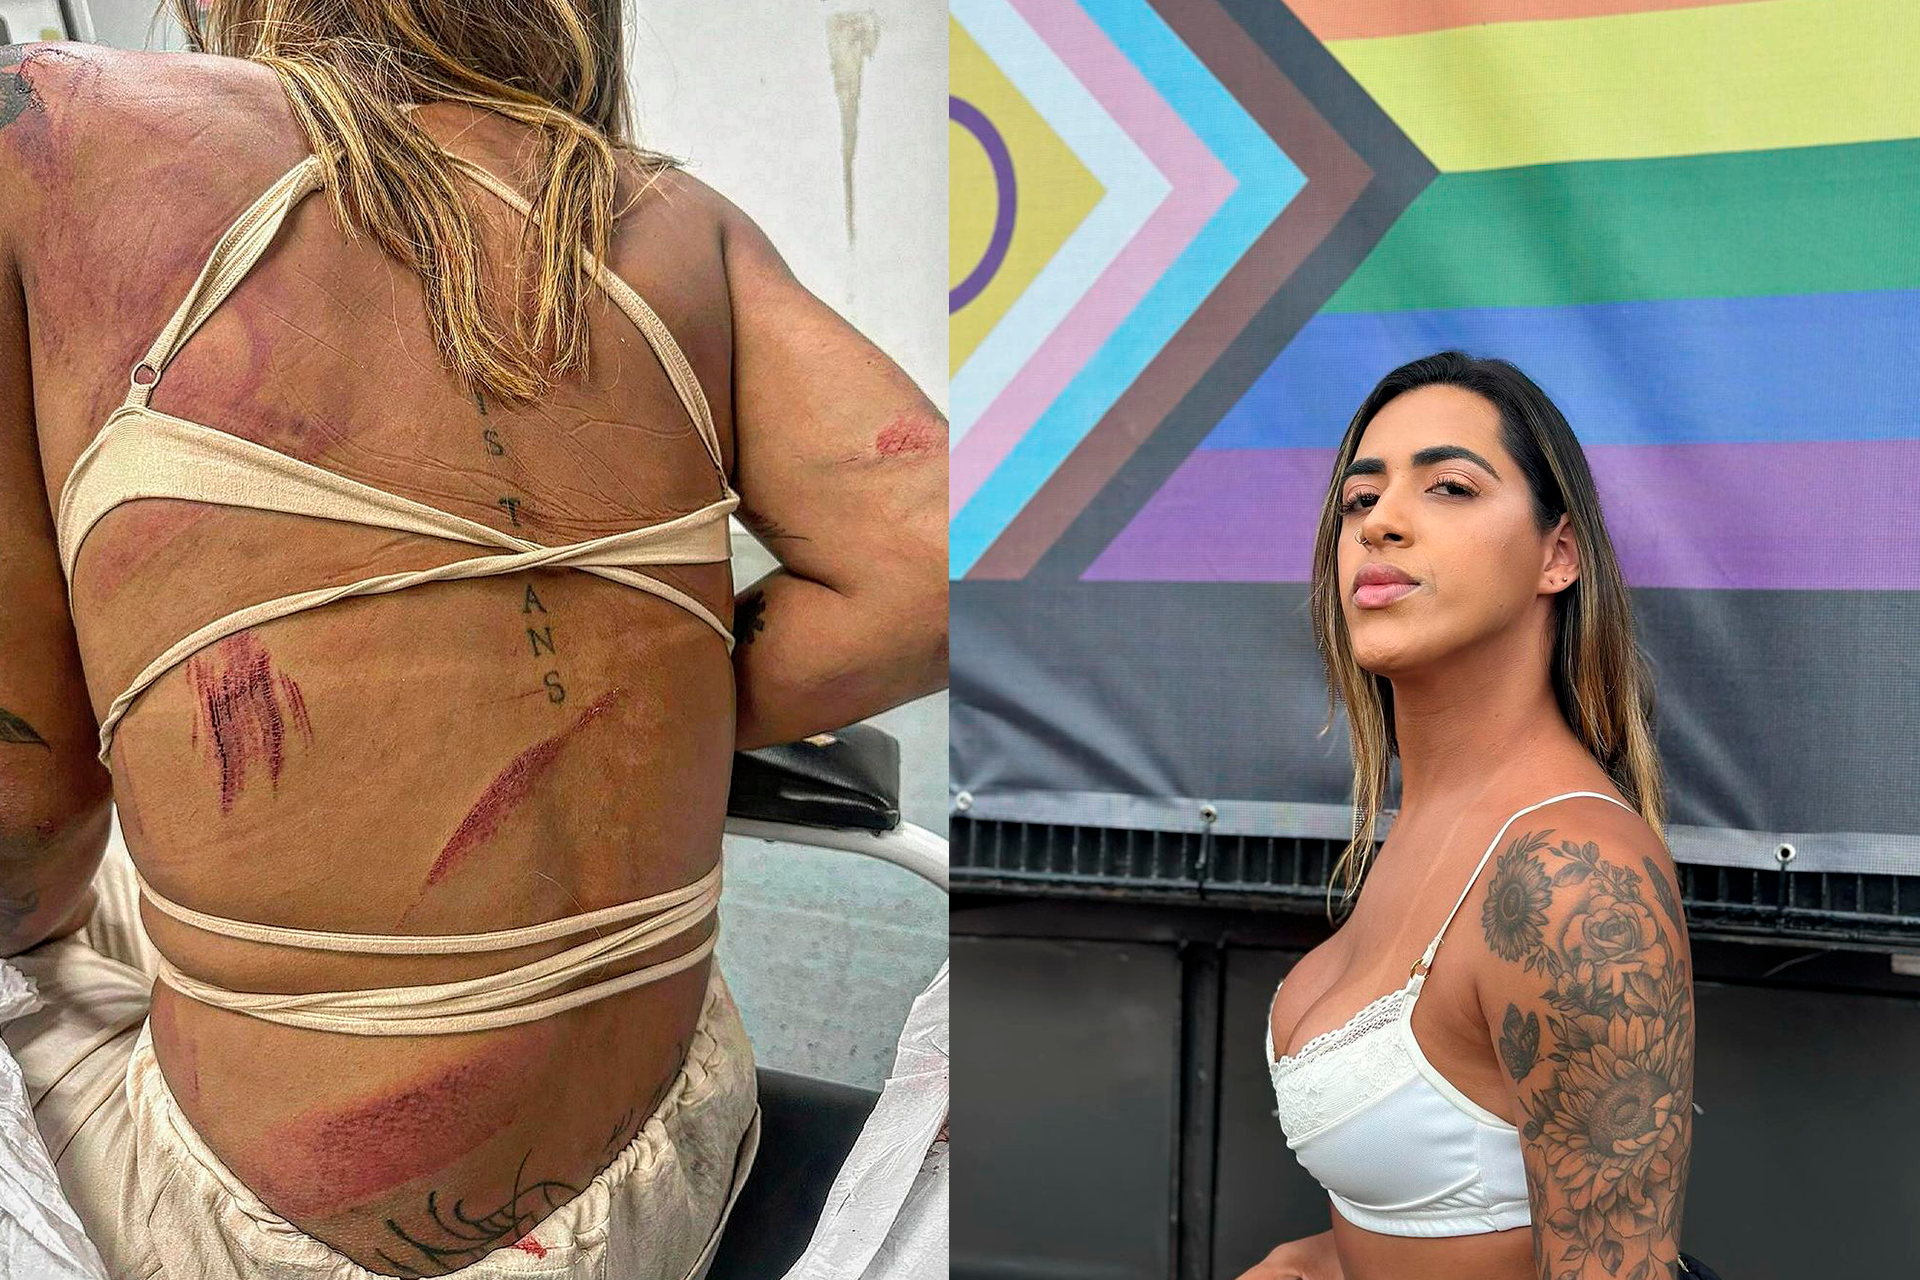 Casal transsexual é agredido em bar no RJ